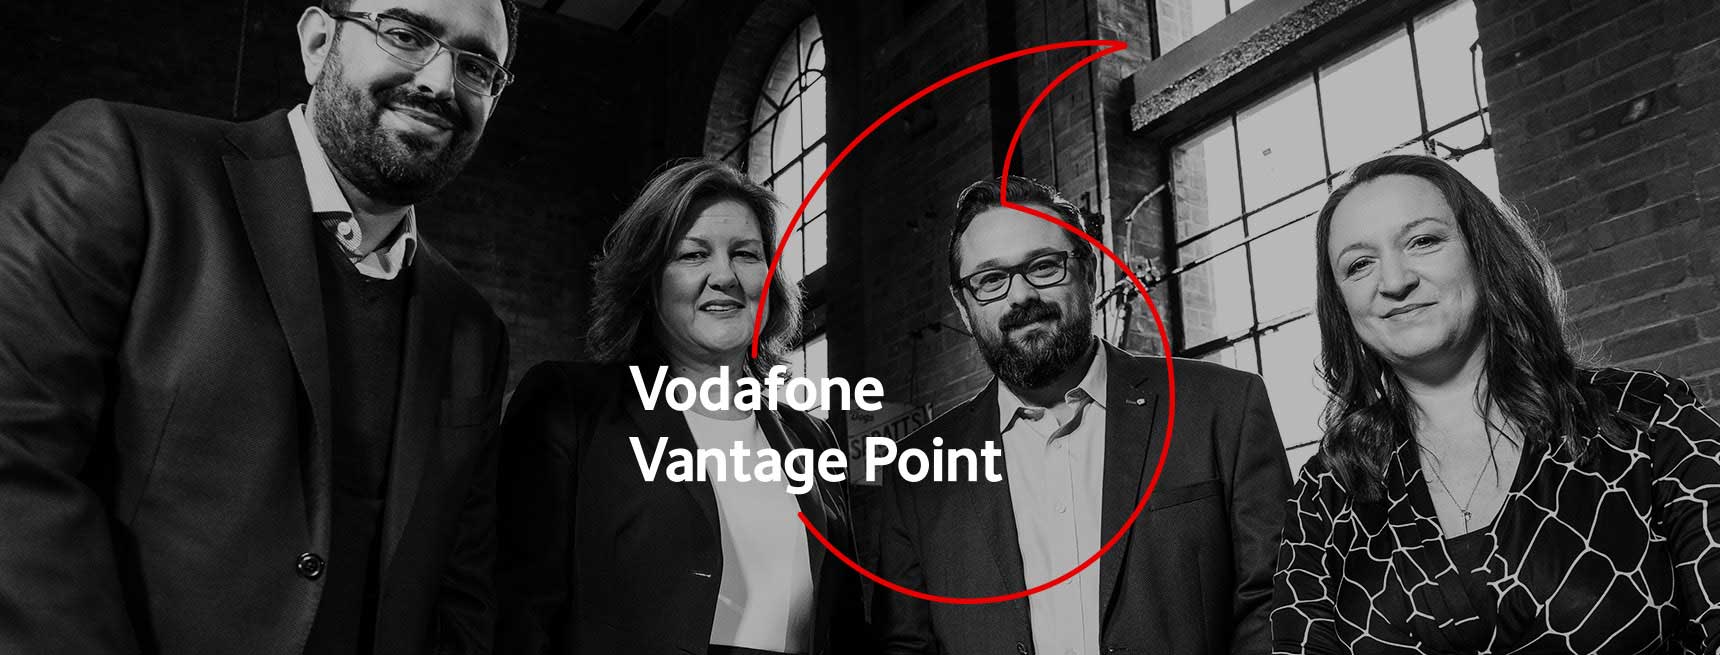 Vodafone Vantage Point